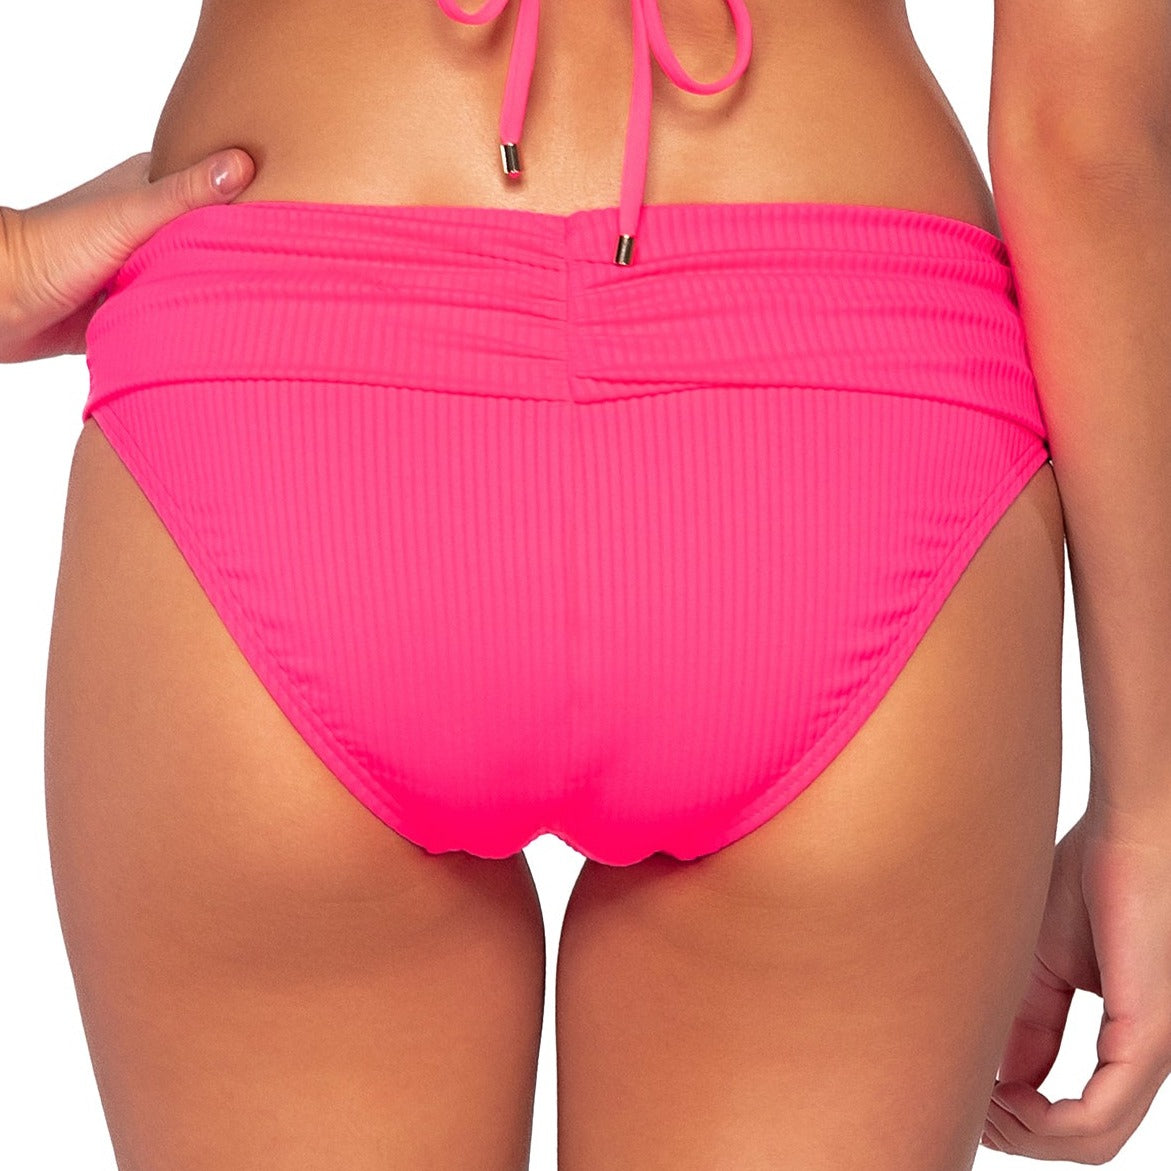 Unforgettable Bikini Bottom - 27B - Neon Pink Swim - Bottoms - Bikini Sunsets, Inc.   